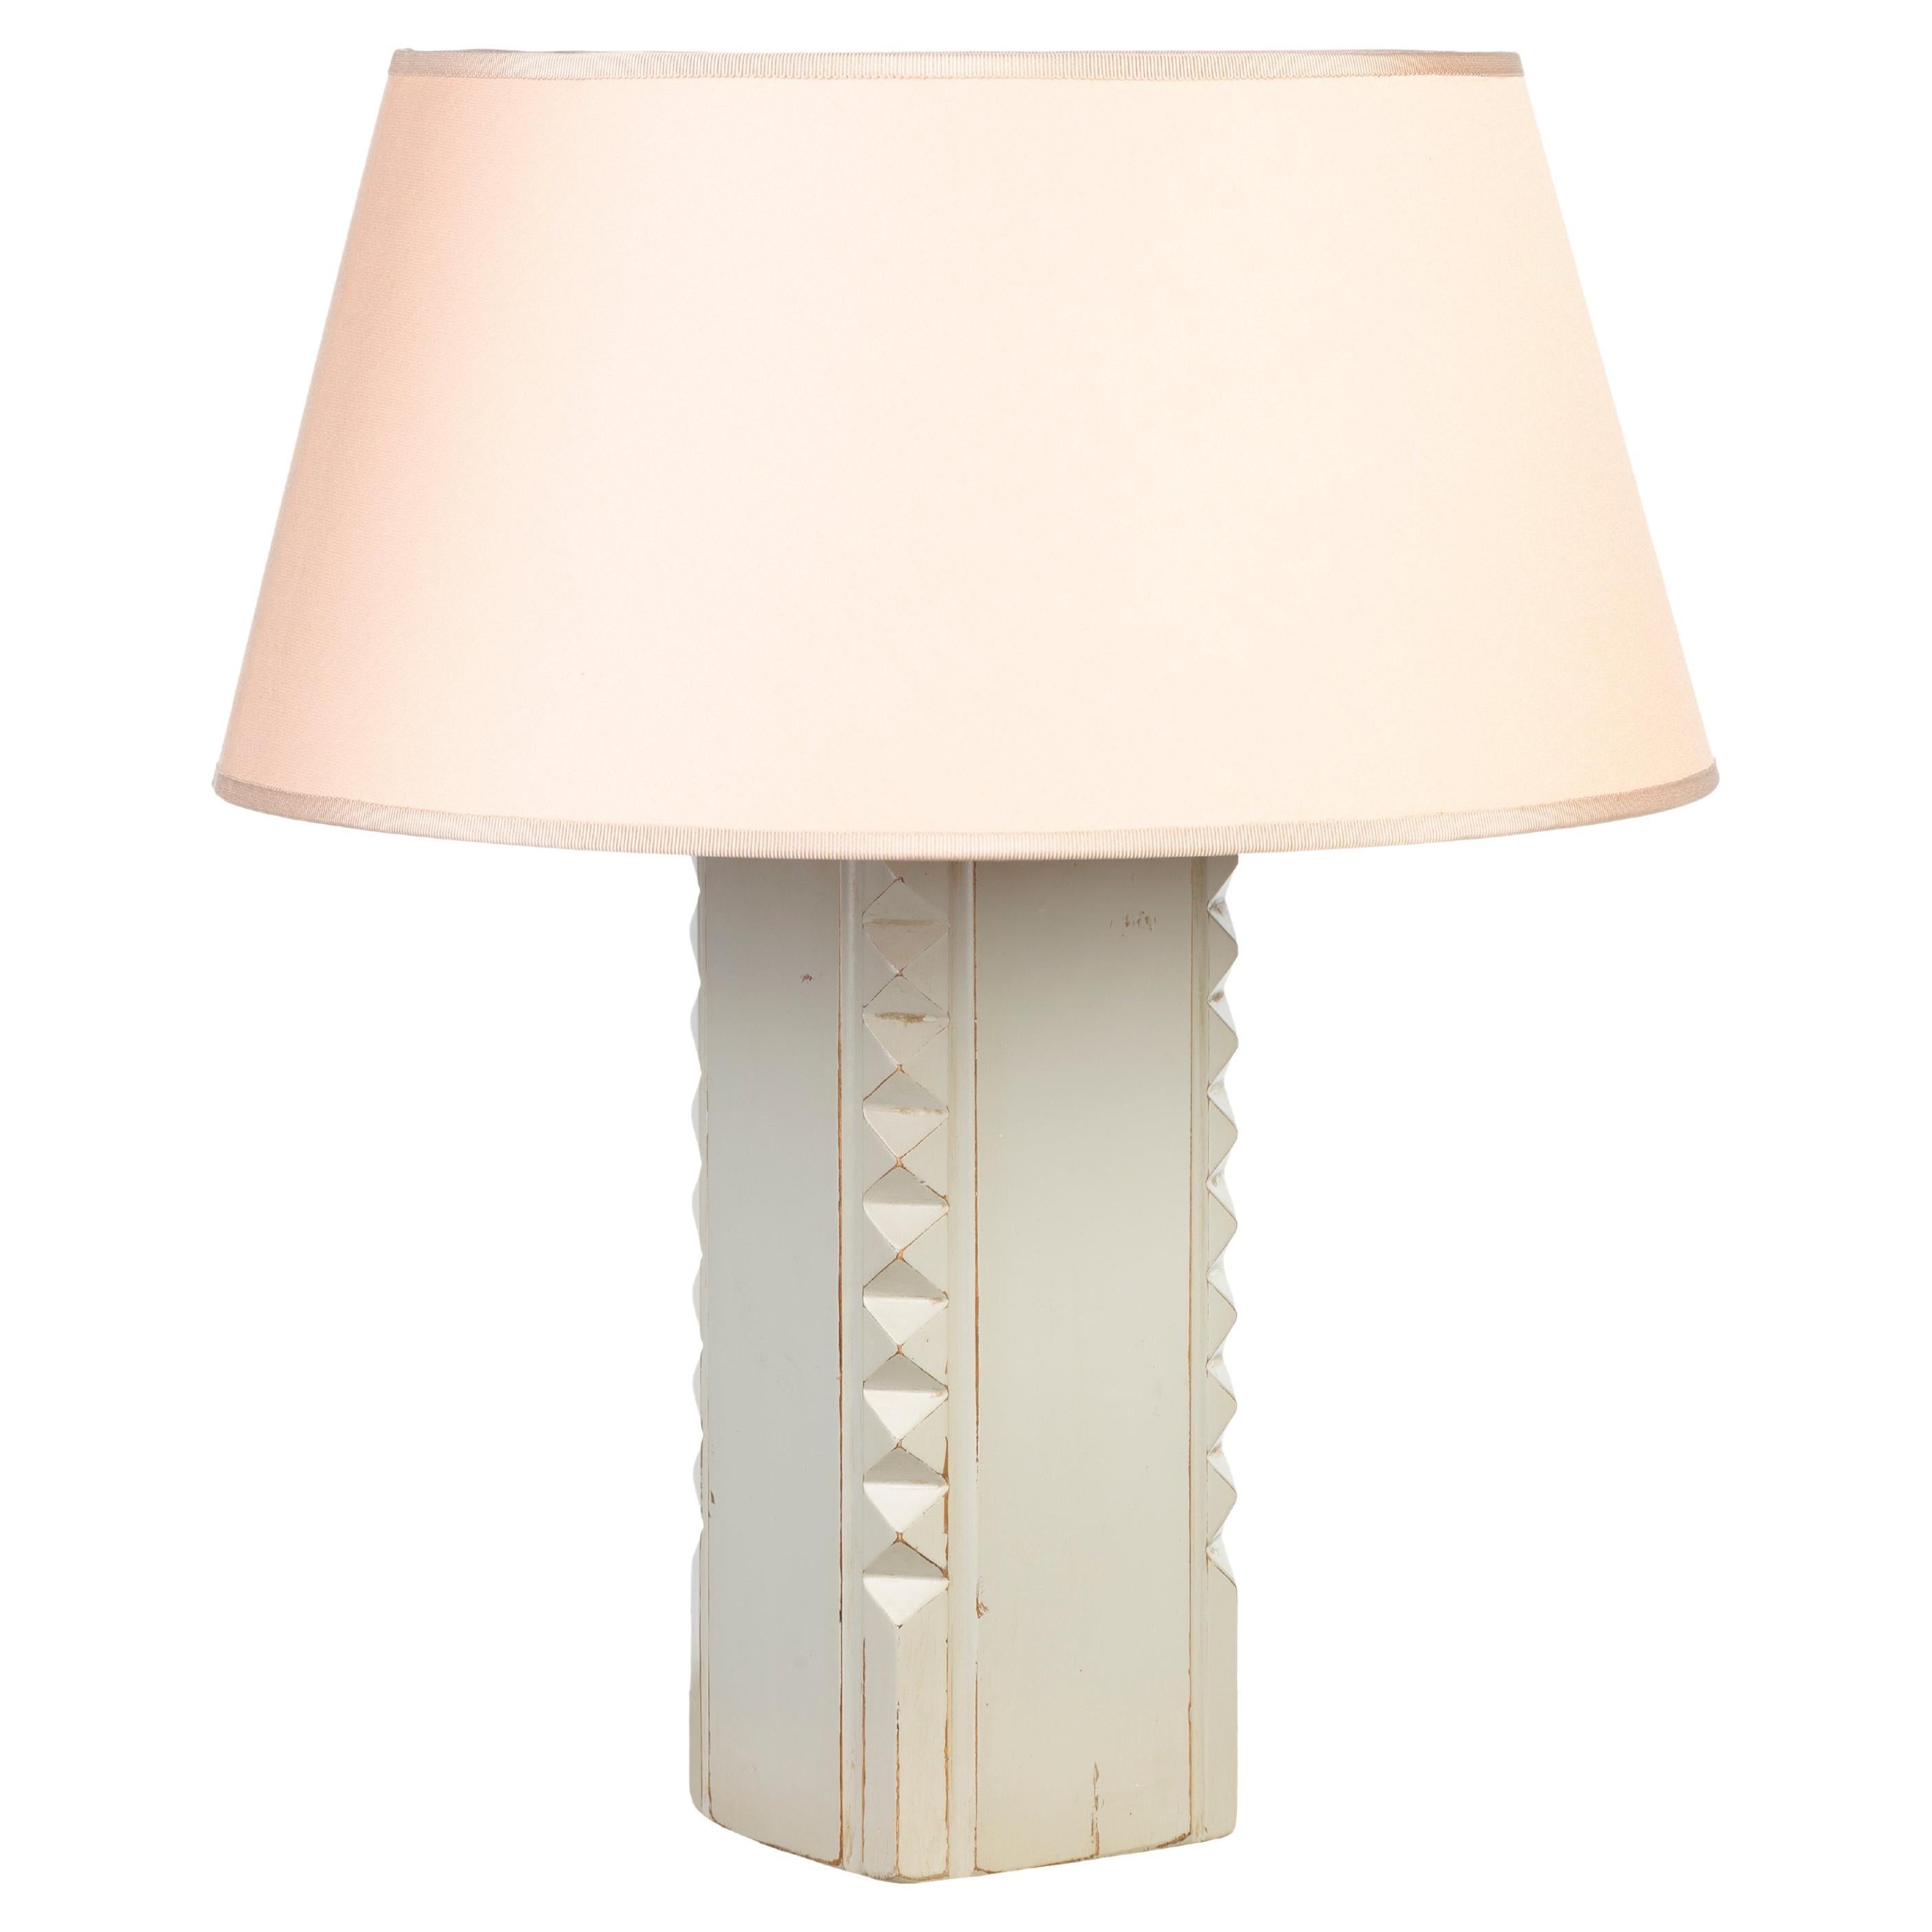 Moissonnier Table Lamp, model Rive Gauche by Pierre Gonalons For Sale